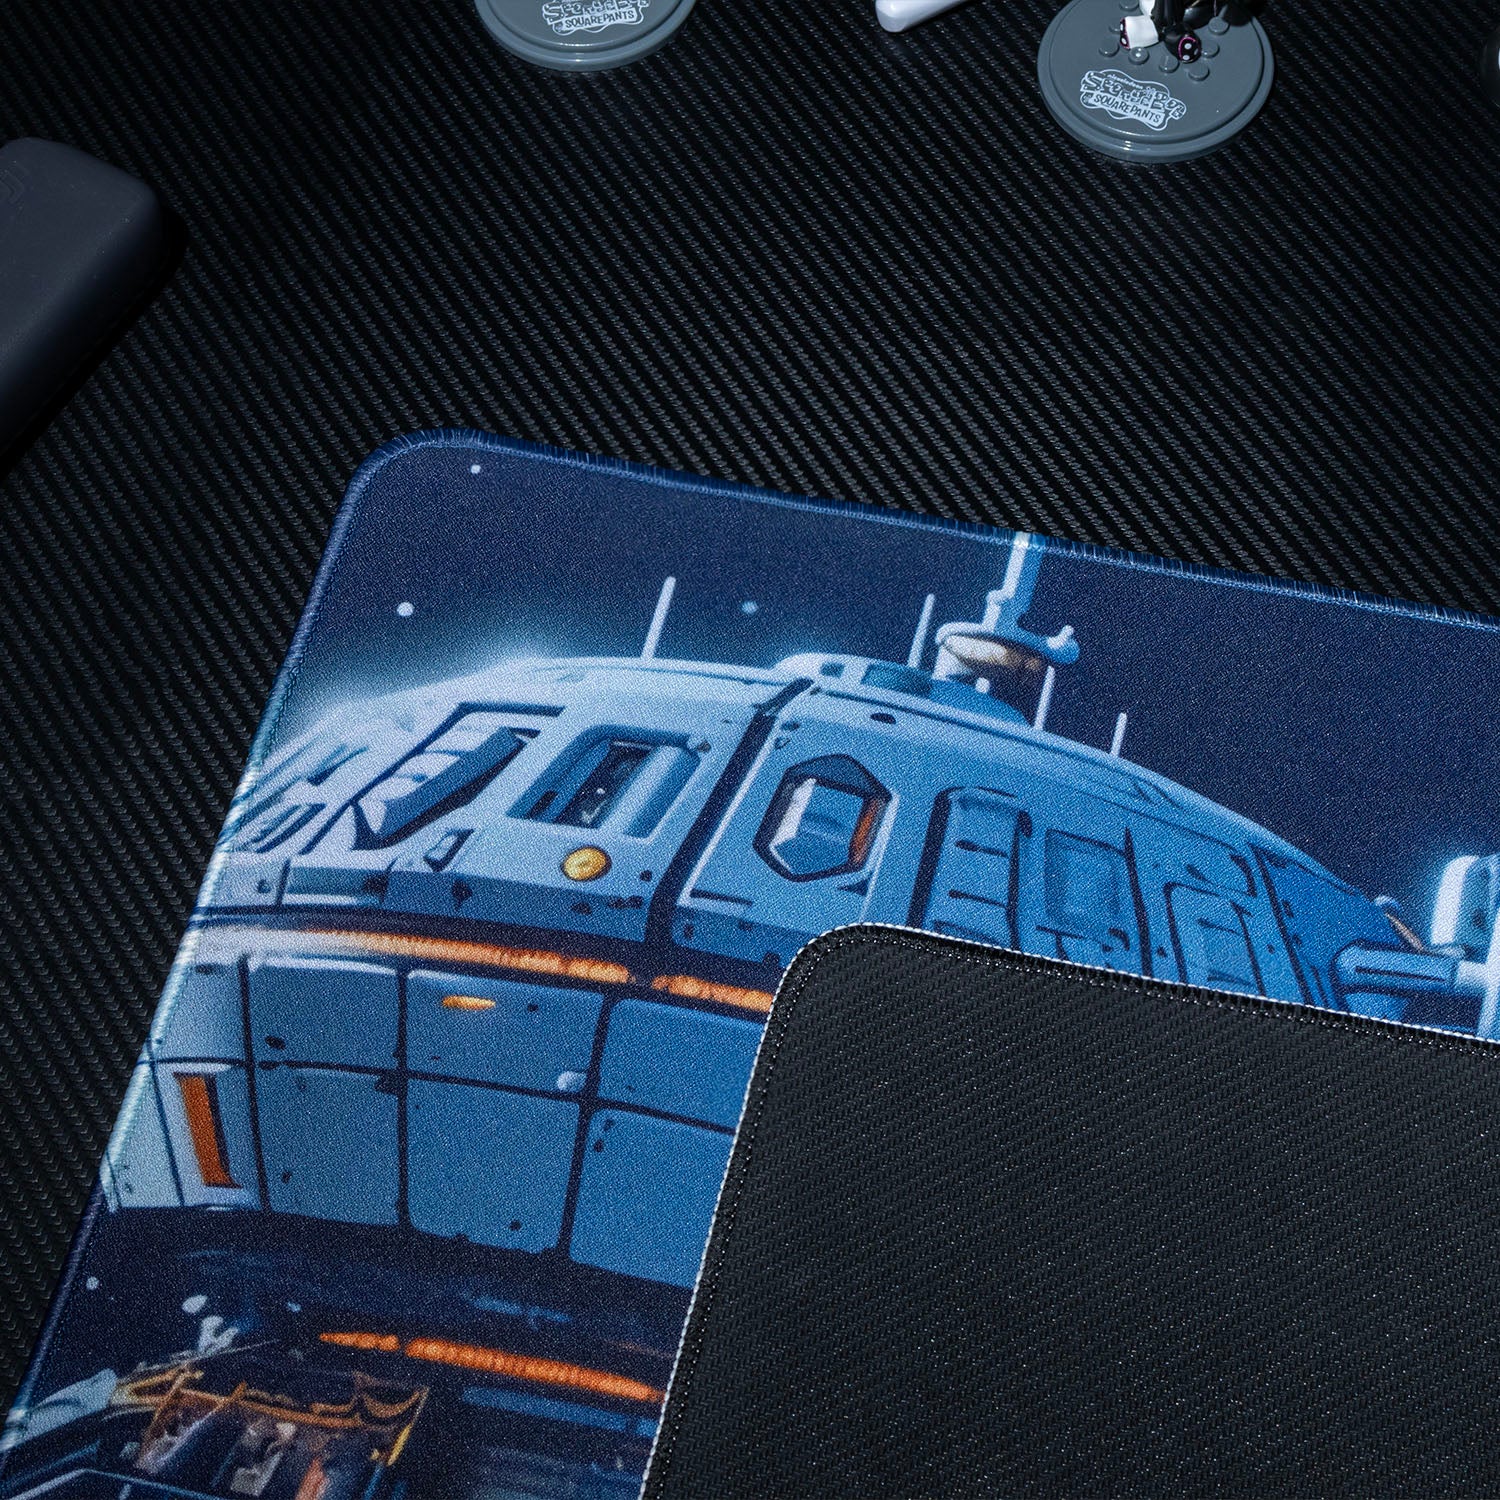 PIIFOX Astro Explorer Table Mat Desk Mat Large Gaming Mouse Pad